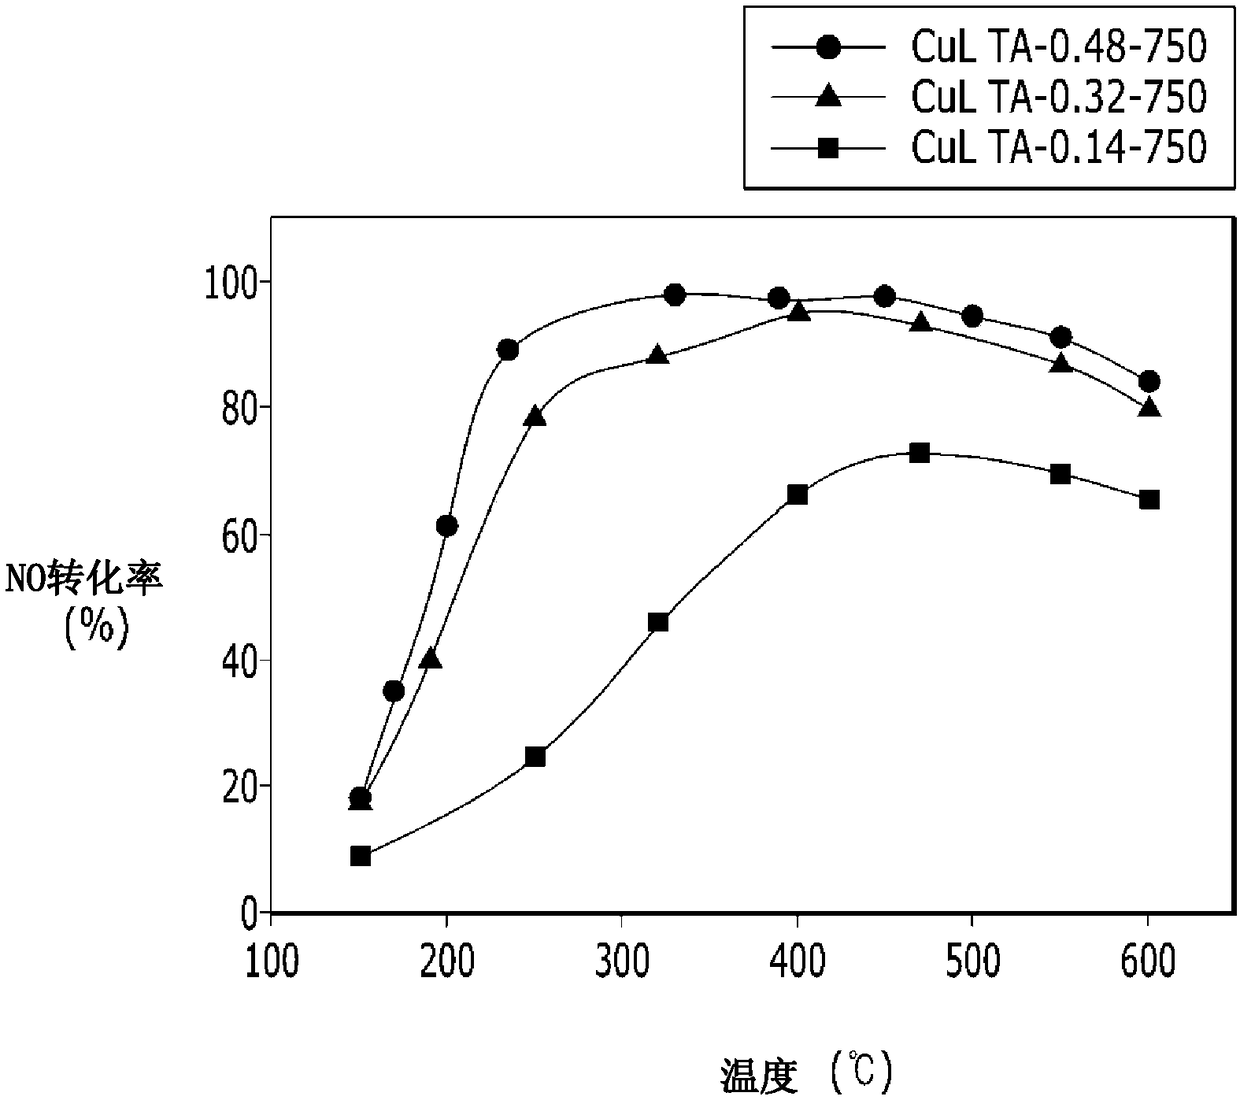 Cu/LTA catalyst and exhaust system, and manufacturing method of Cu/LTA catalyst